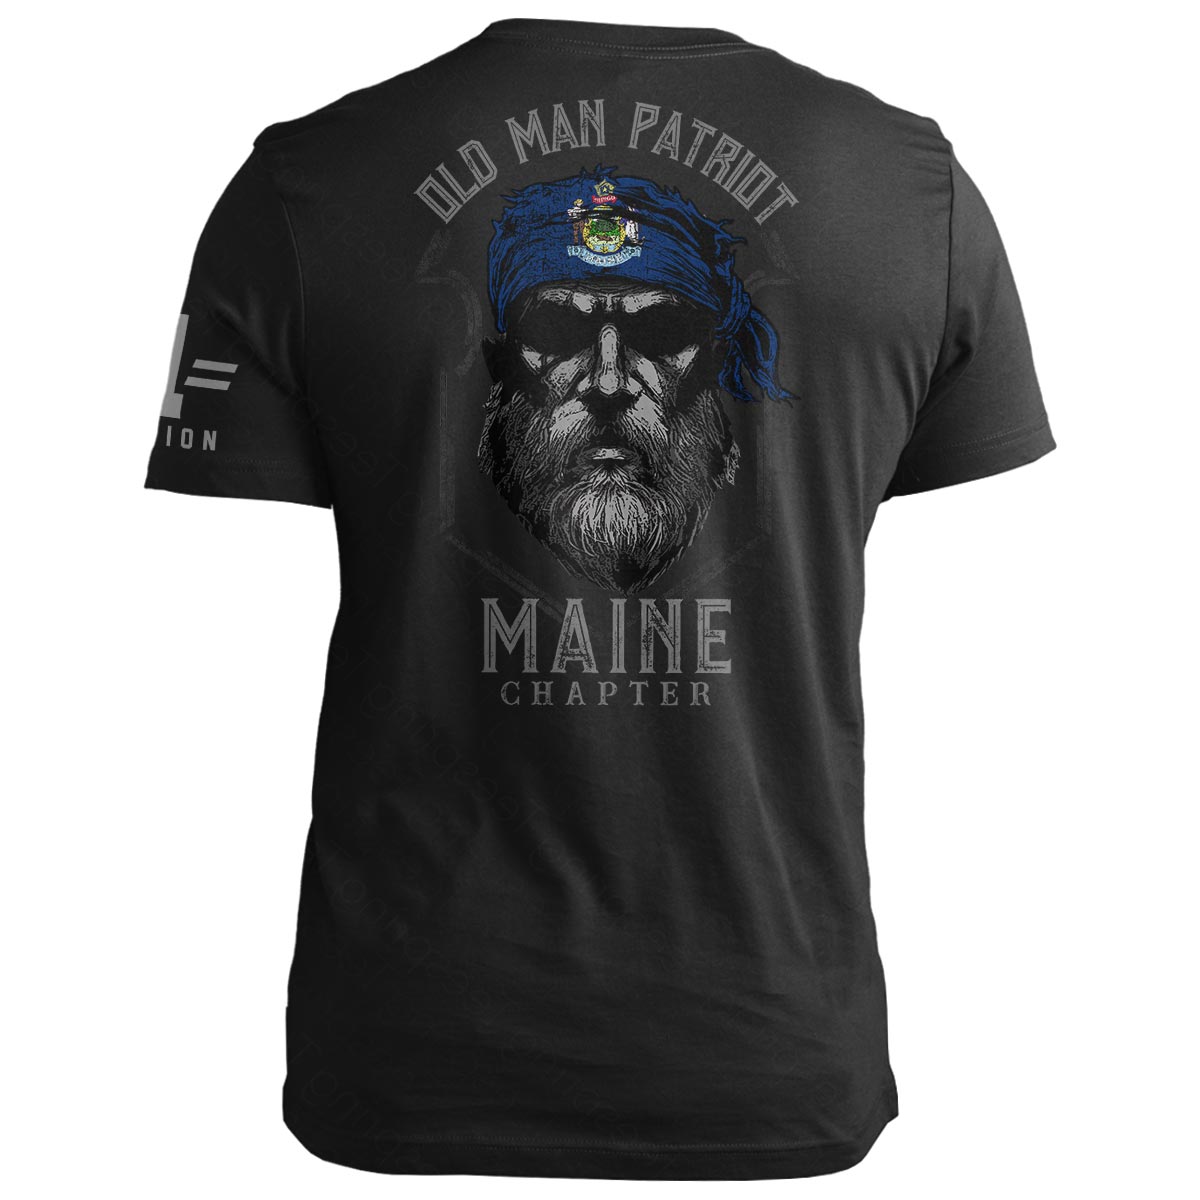 Maine Old Man Patriot